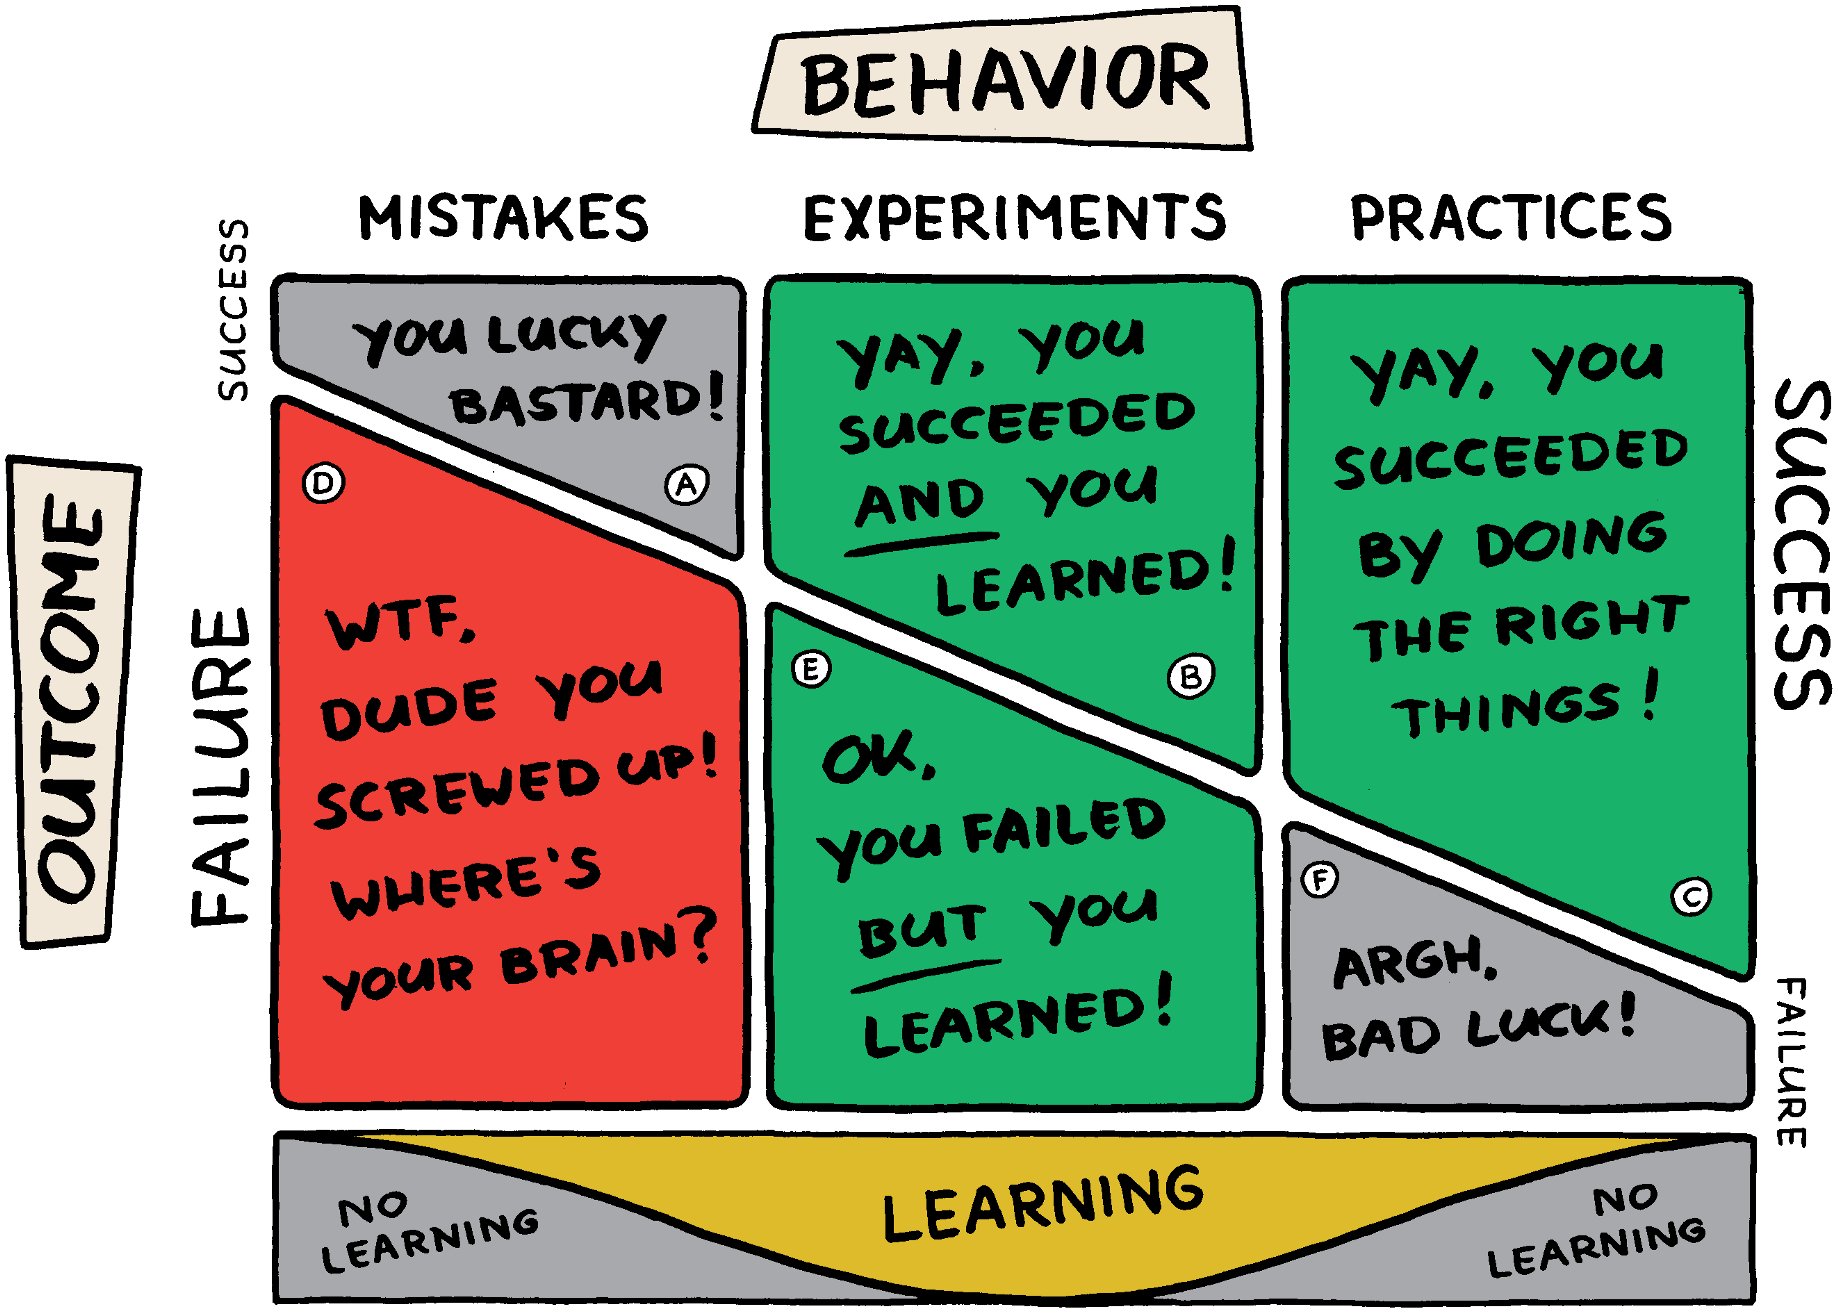 Comparing outcomes to behaviors